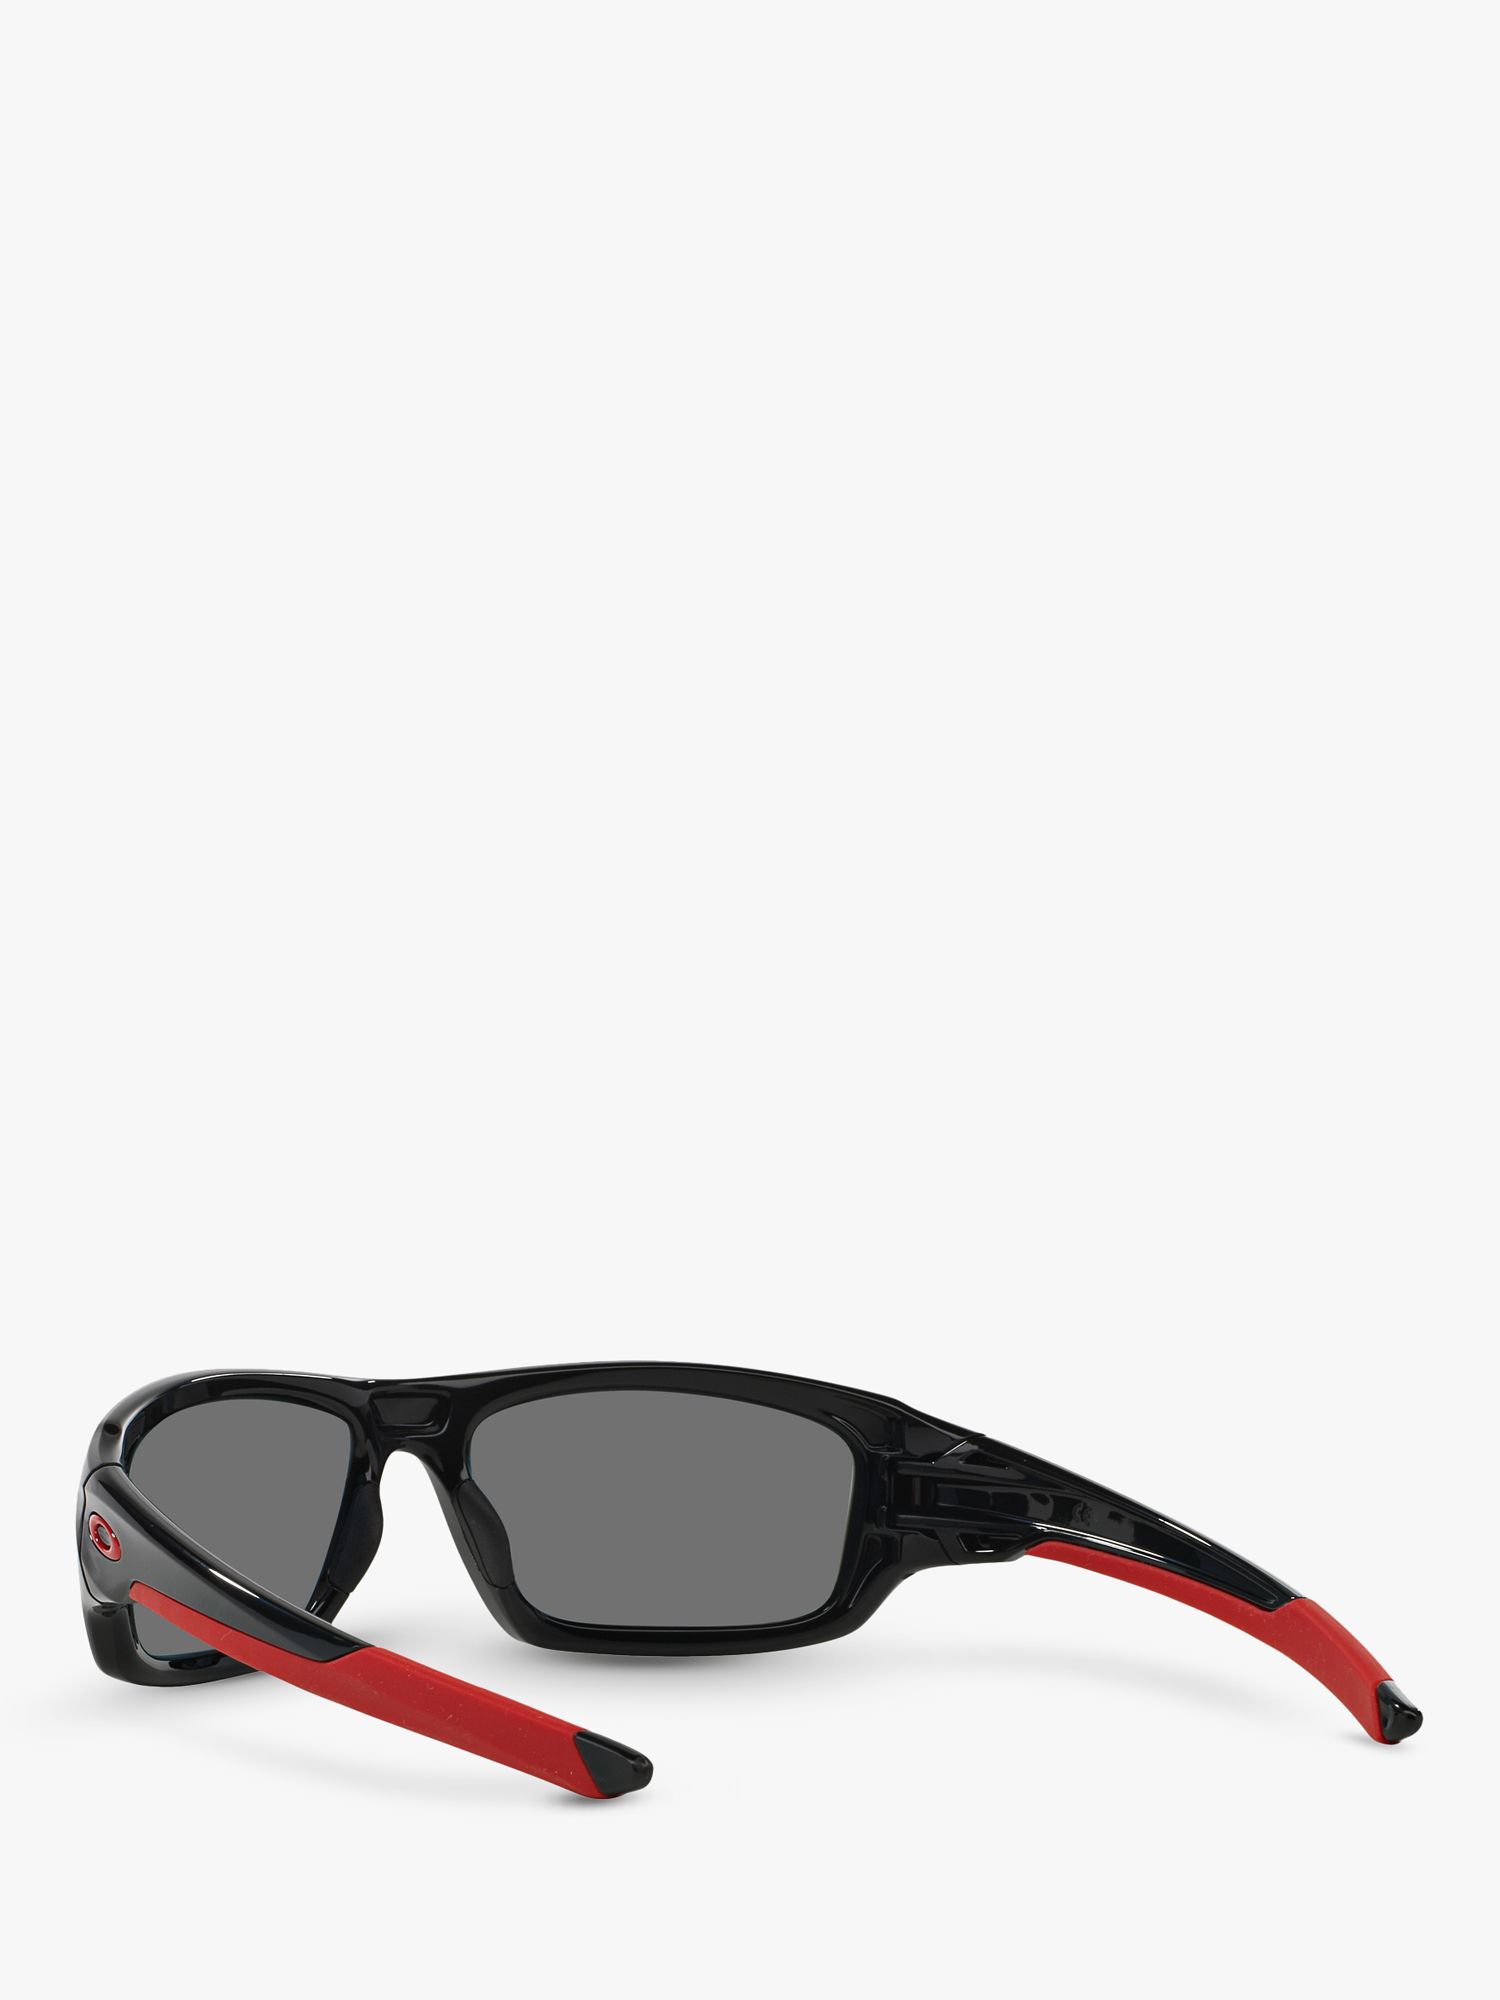 Oakley OO9236 Men's Valve Rectangular Sunglasses, Polished Black/Red Mirror